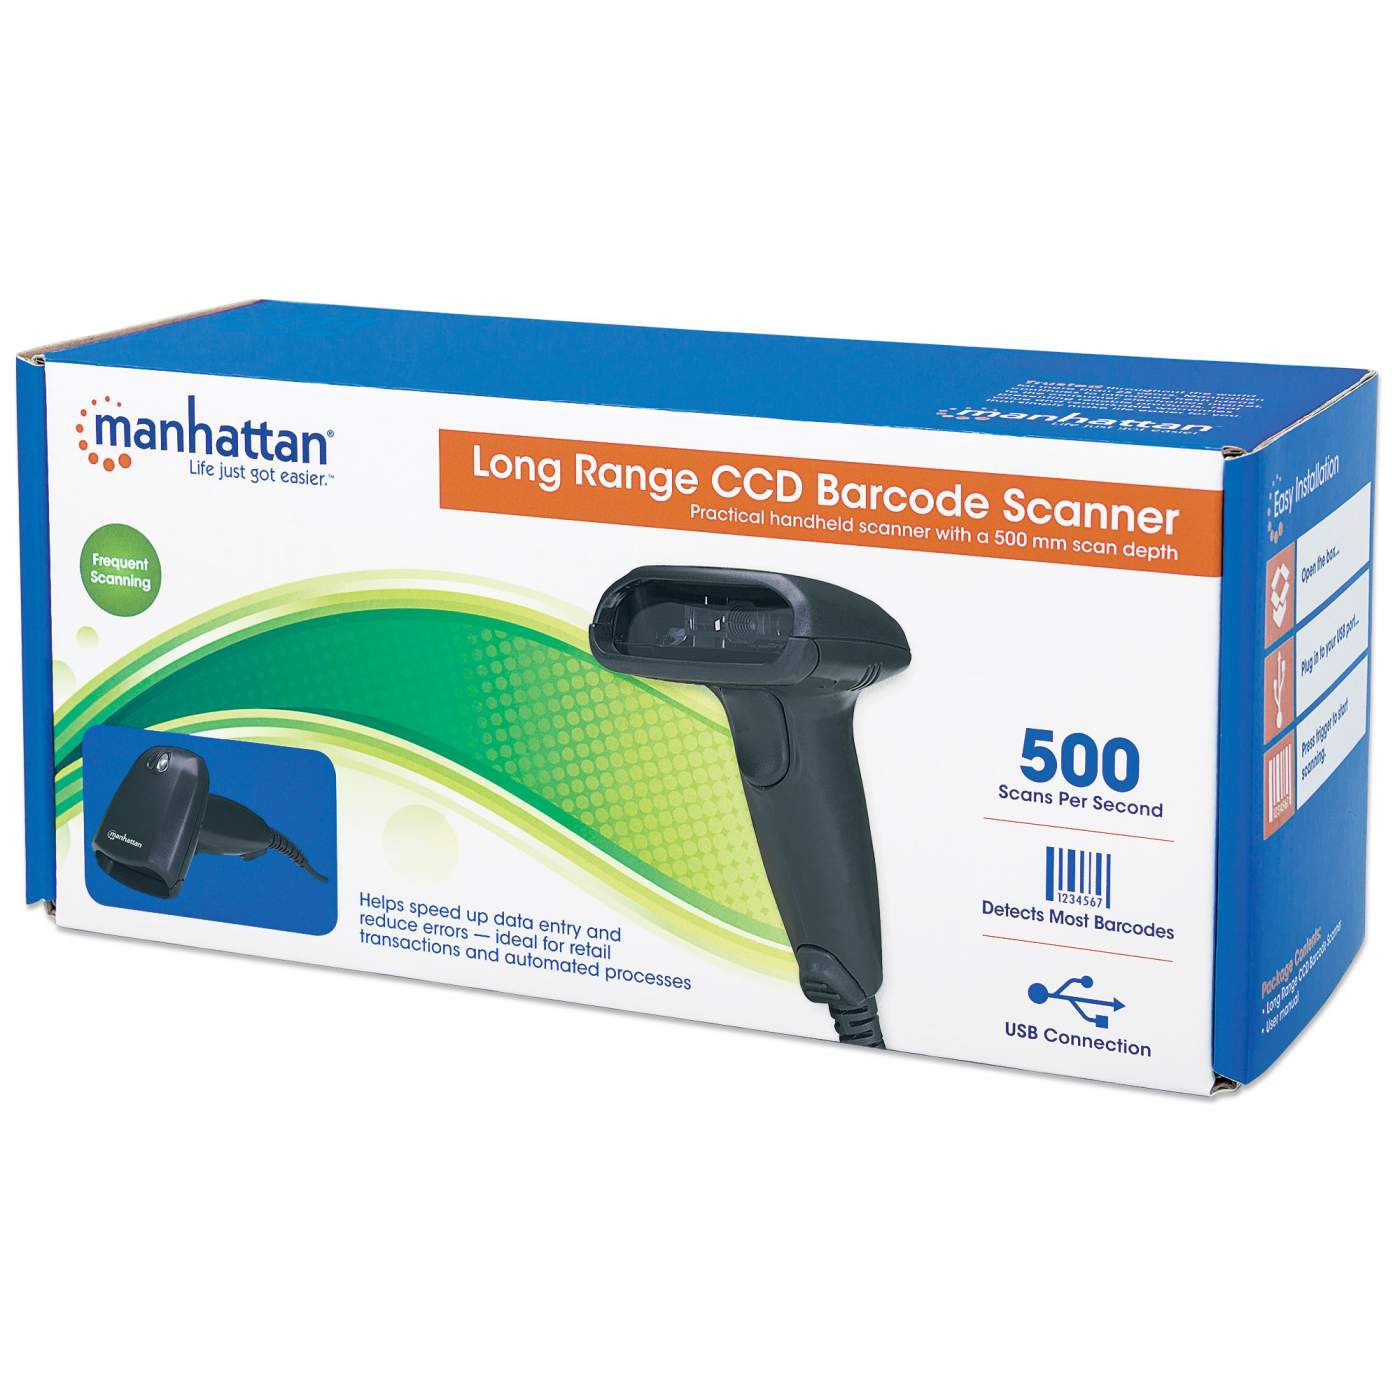 Long Range CCD Barcode Scanner Packaging Image 2